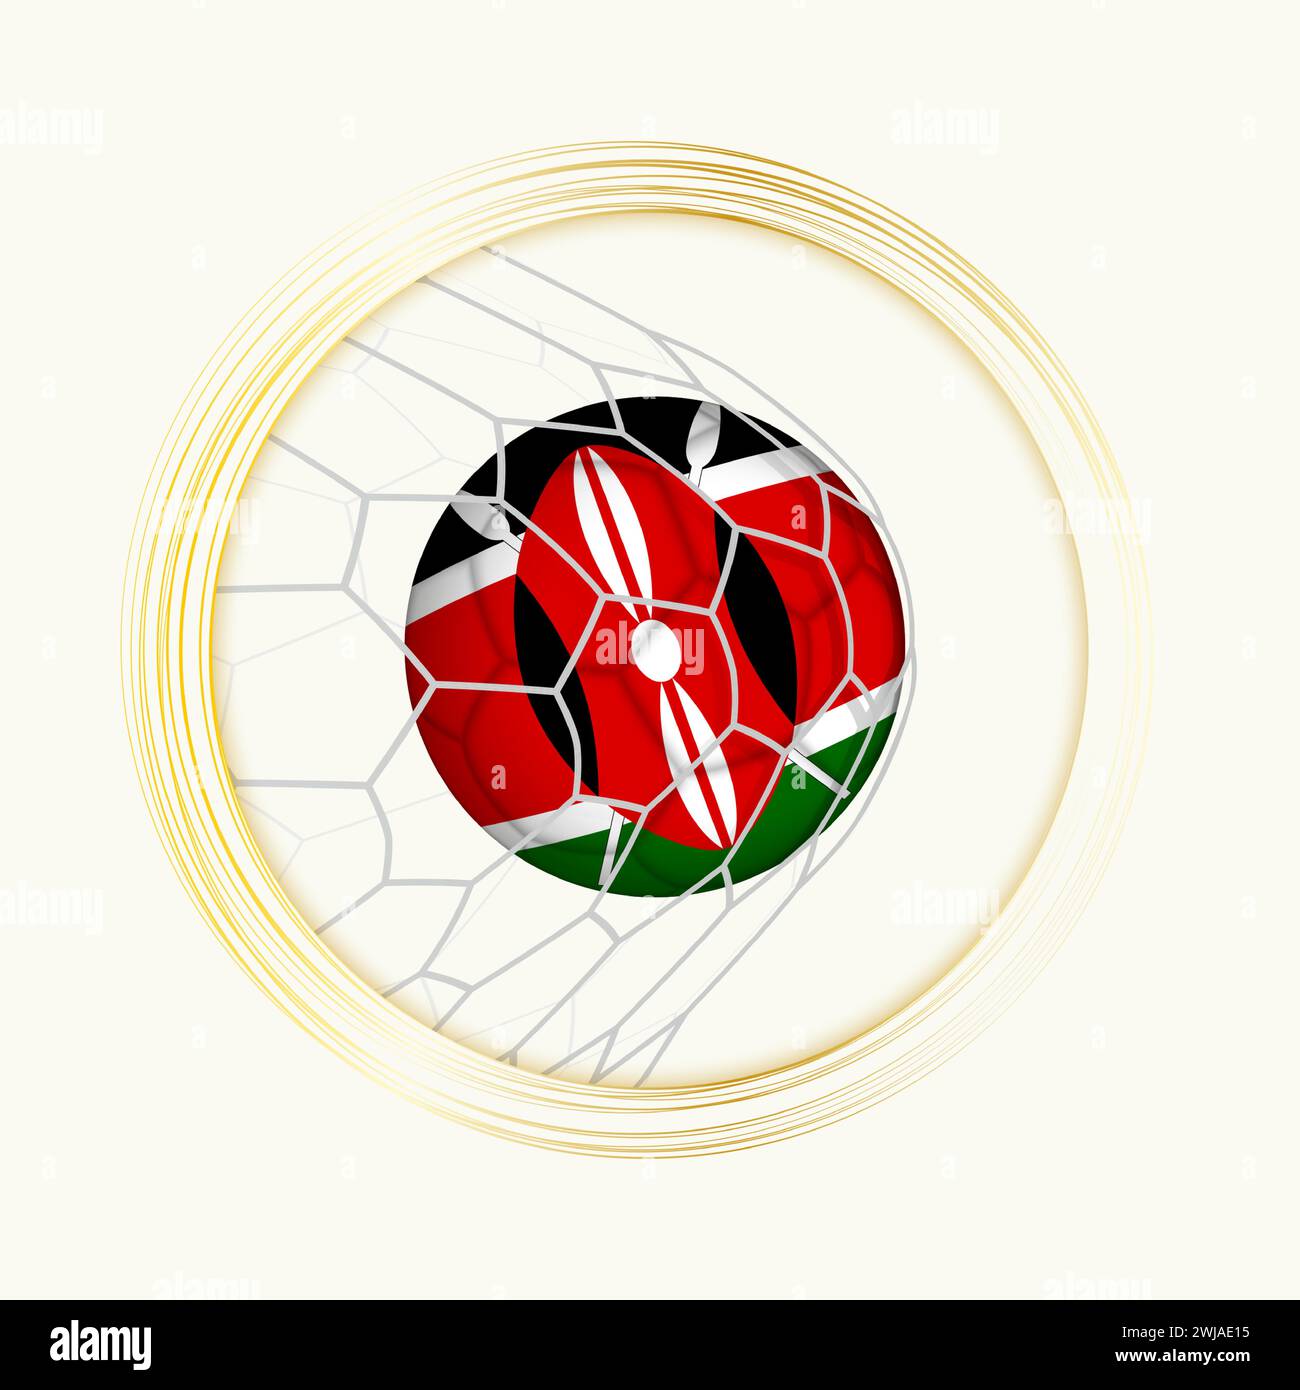 Kenya scoring goal, abstract football symbol with illustration of Kenya ball in soccer net. Vector sport illustration. Stock Vector